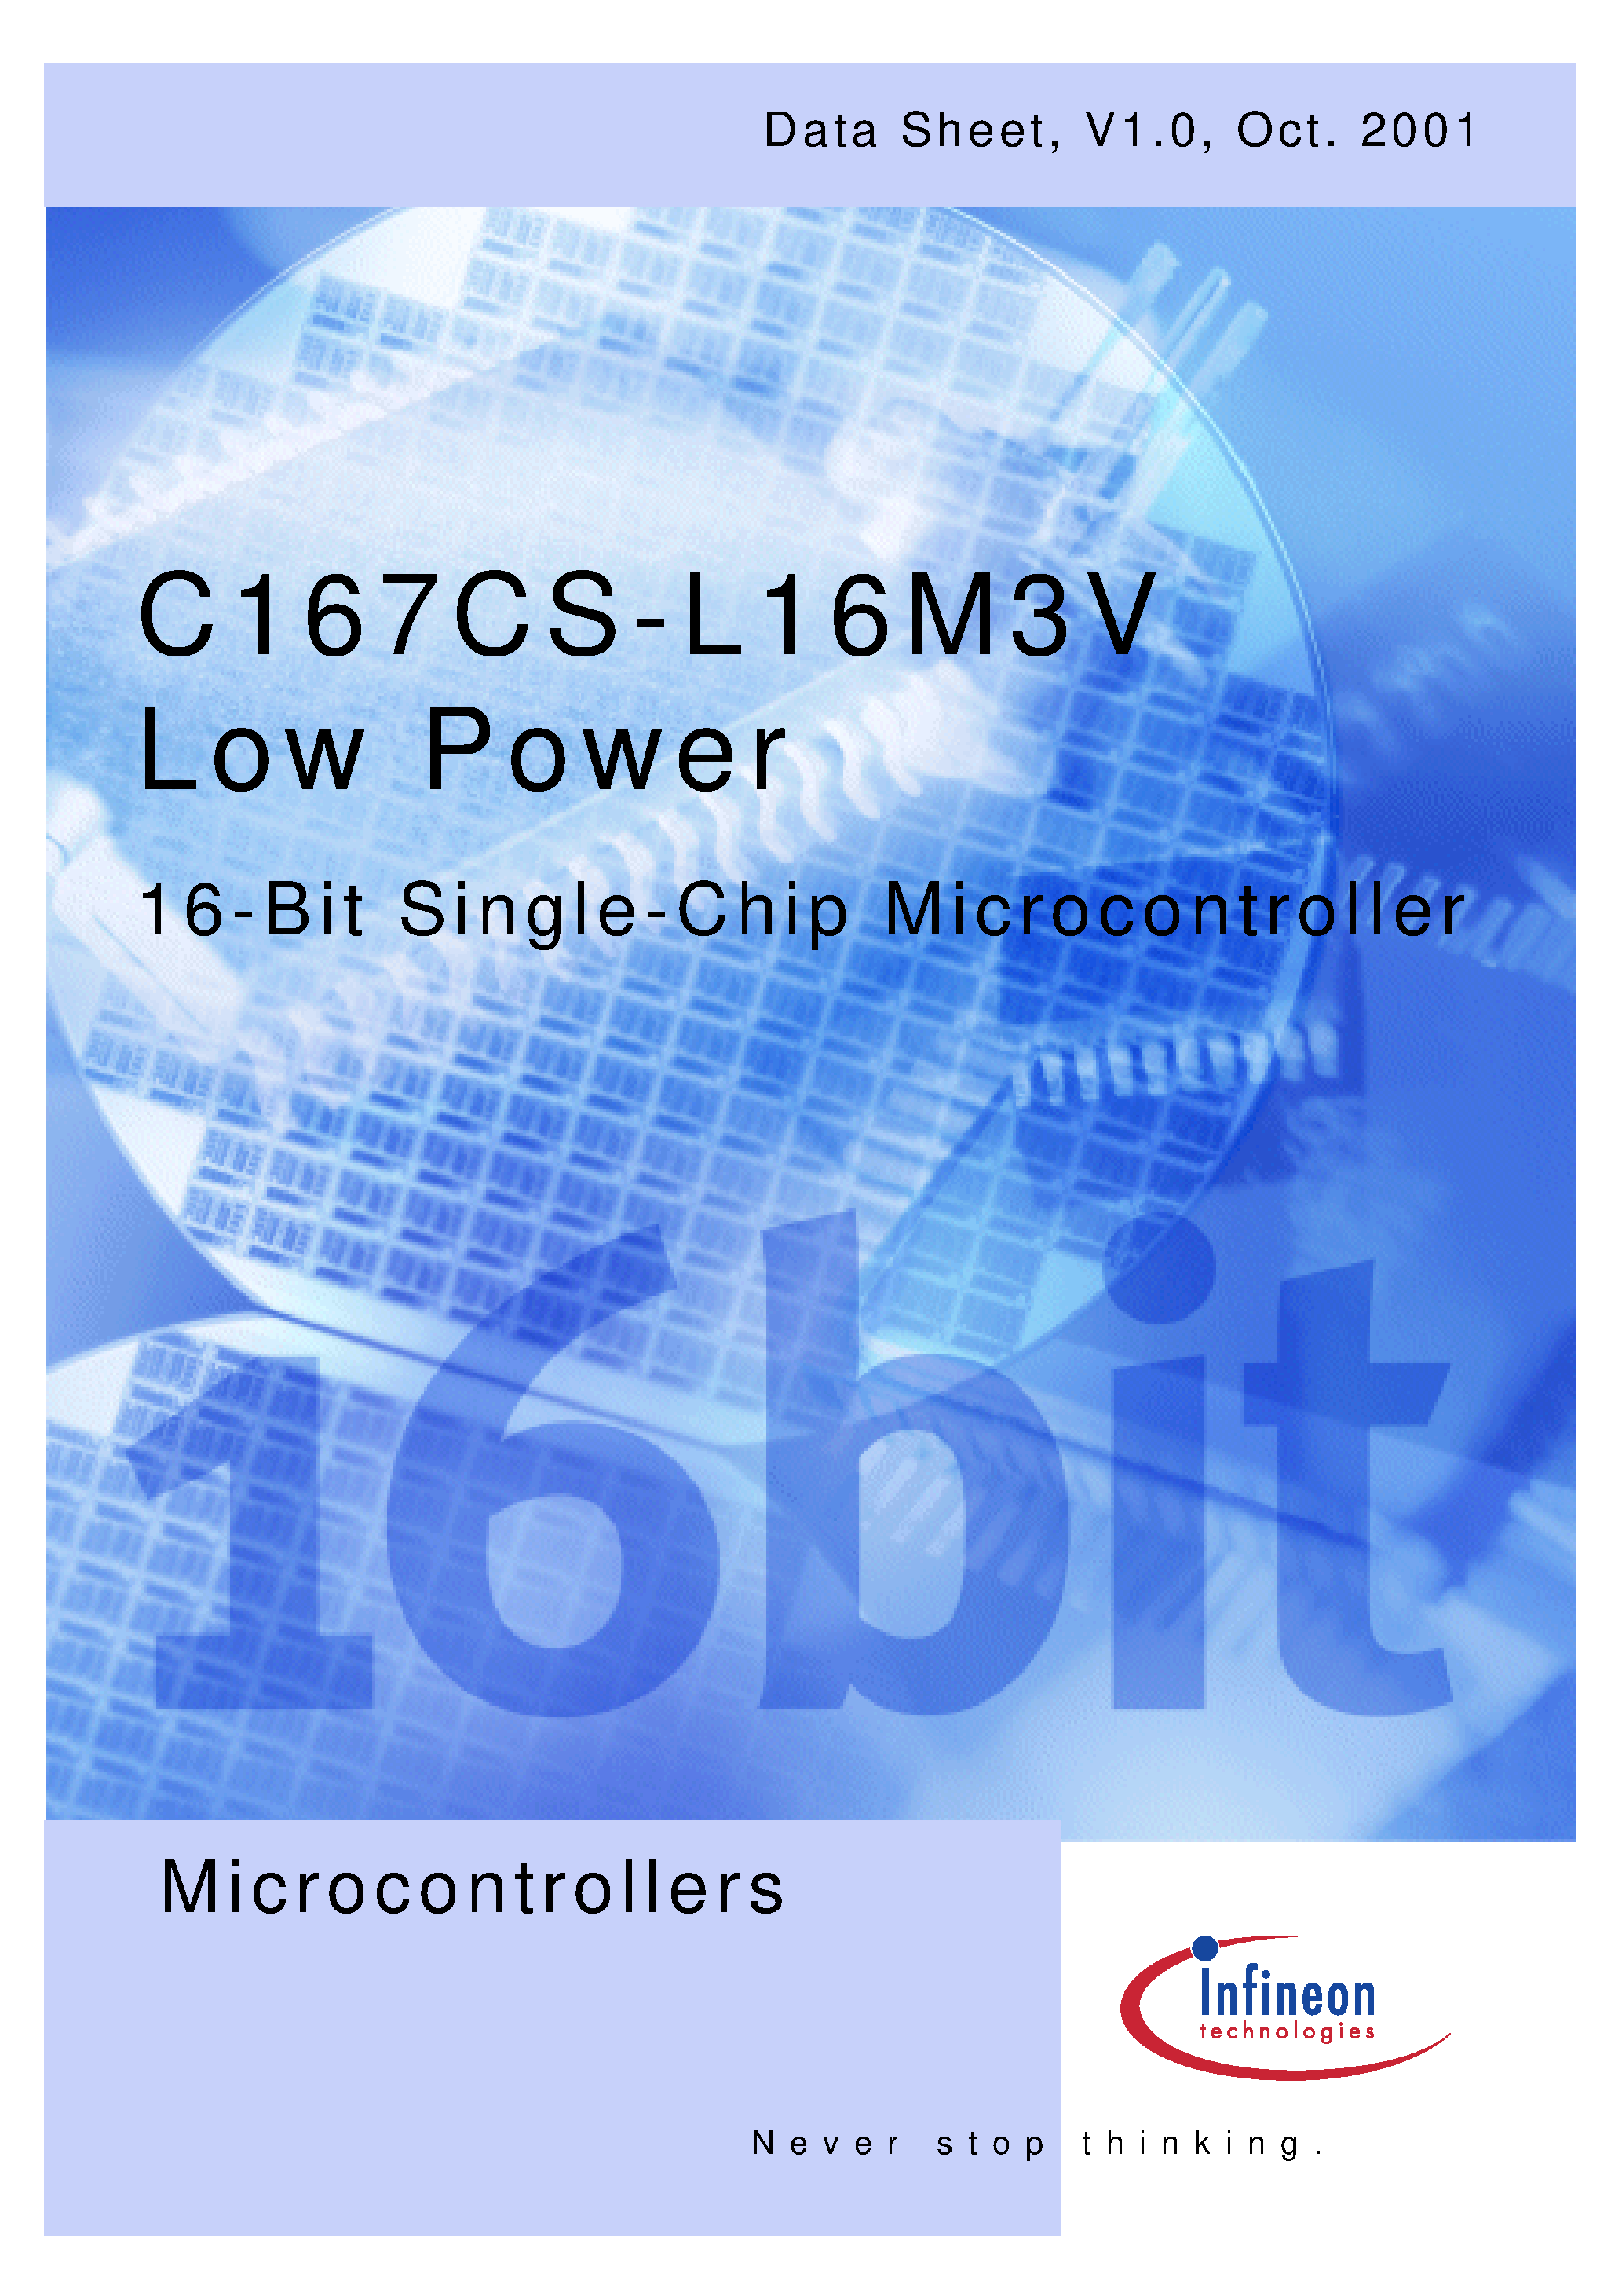 Datasheet SAF-C167CS-L16M3V - 16-Bi t Single-Chip Microcontroller page 1